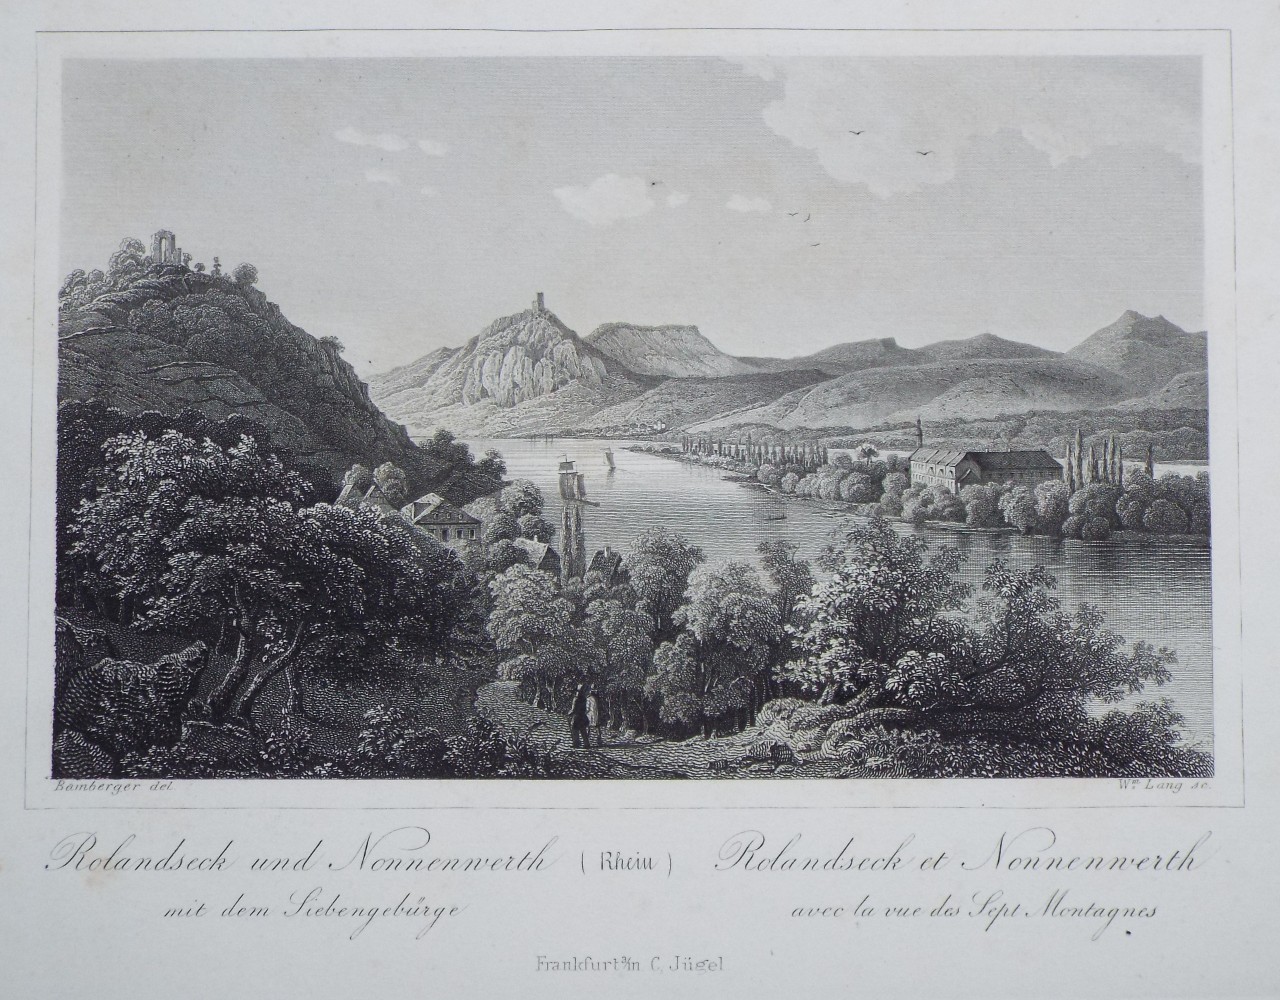 Print - Rolandseck und Nonnenwerth mit dem Siebengeburge (Rhein) Rolandseck et Nonnenwerth avec la vue des Sept Montagnes - Lang